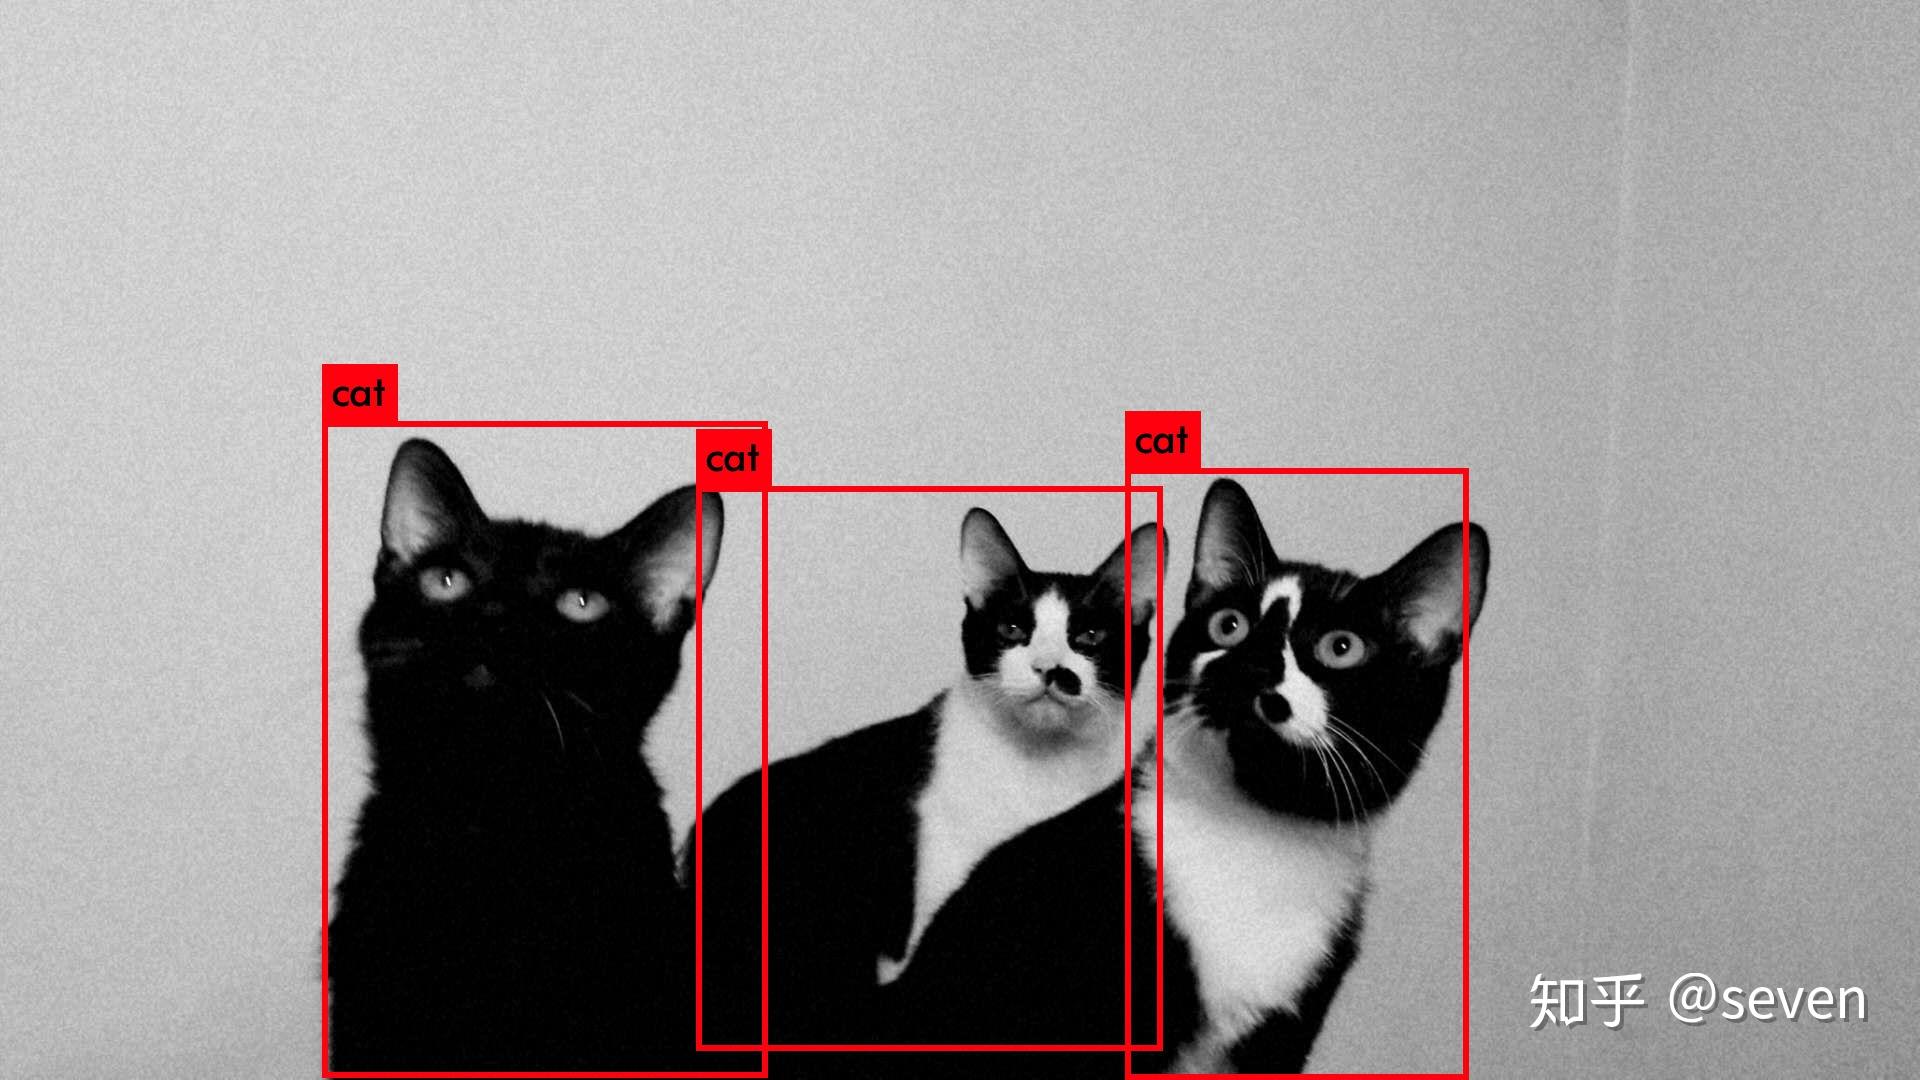 【Matlab 图像】边缘检测算法及效果演示 - 古月居